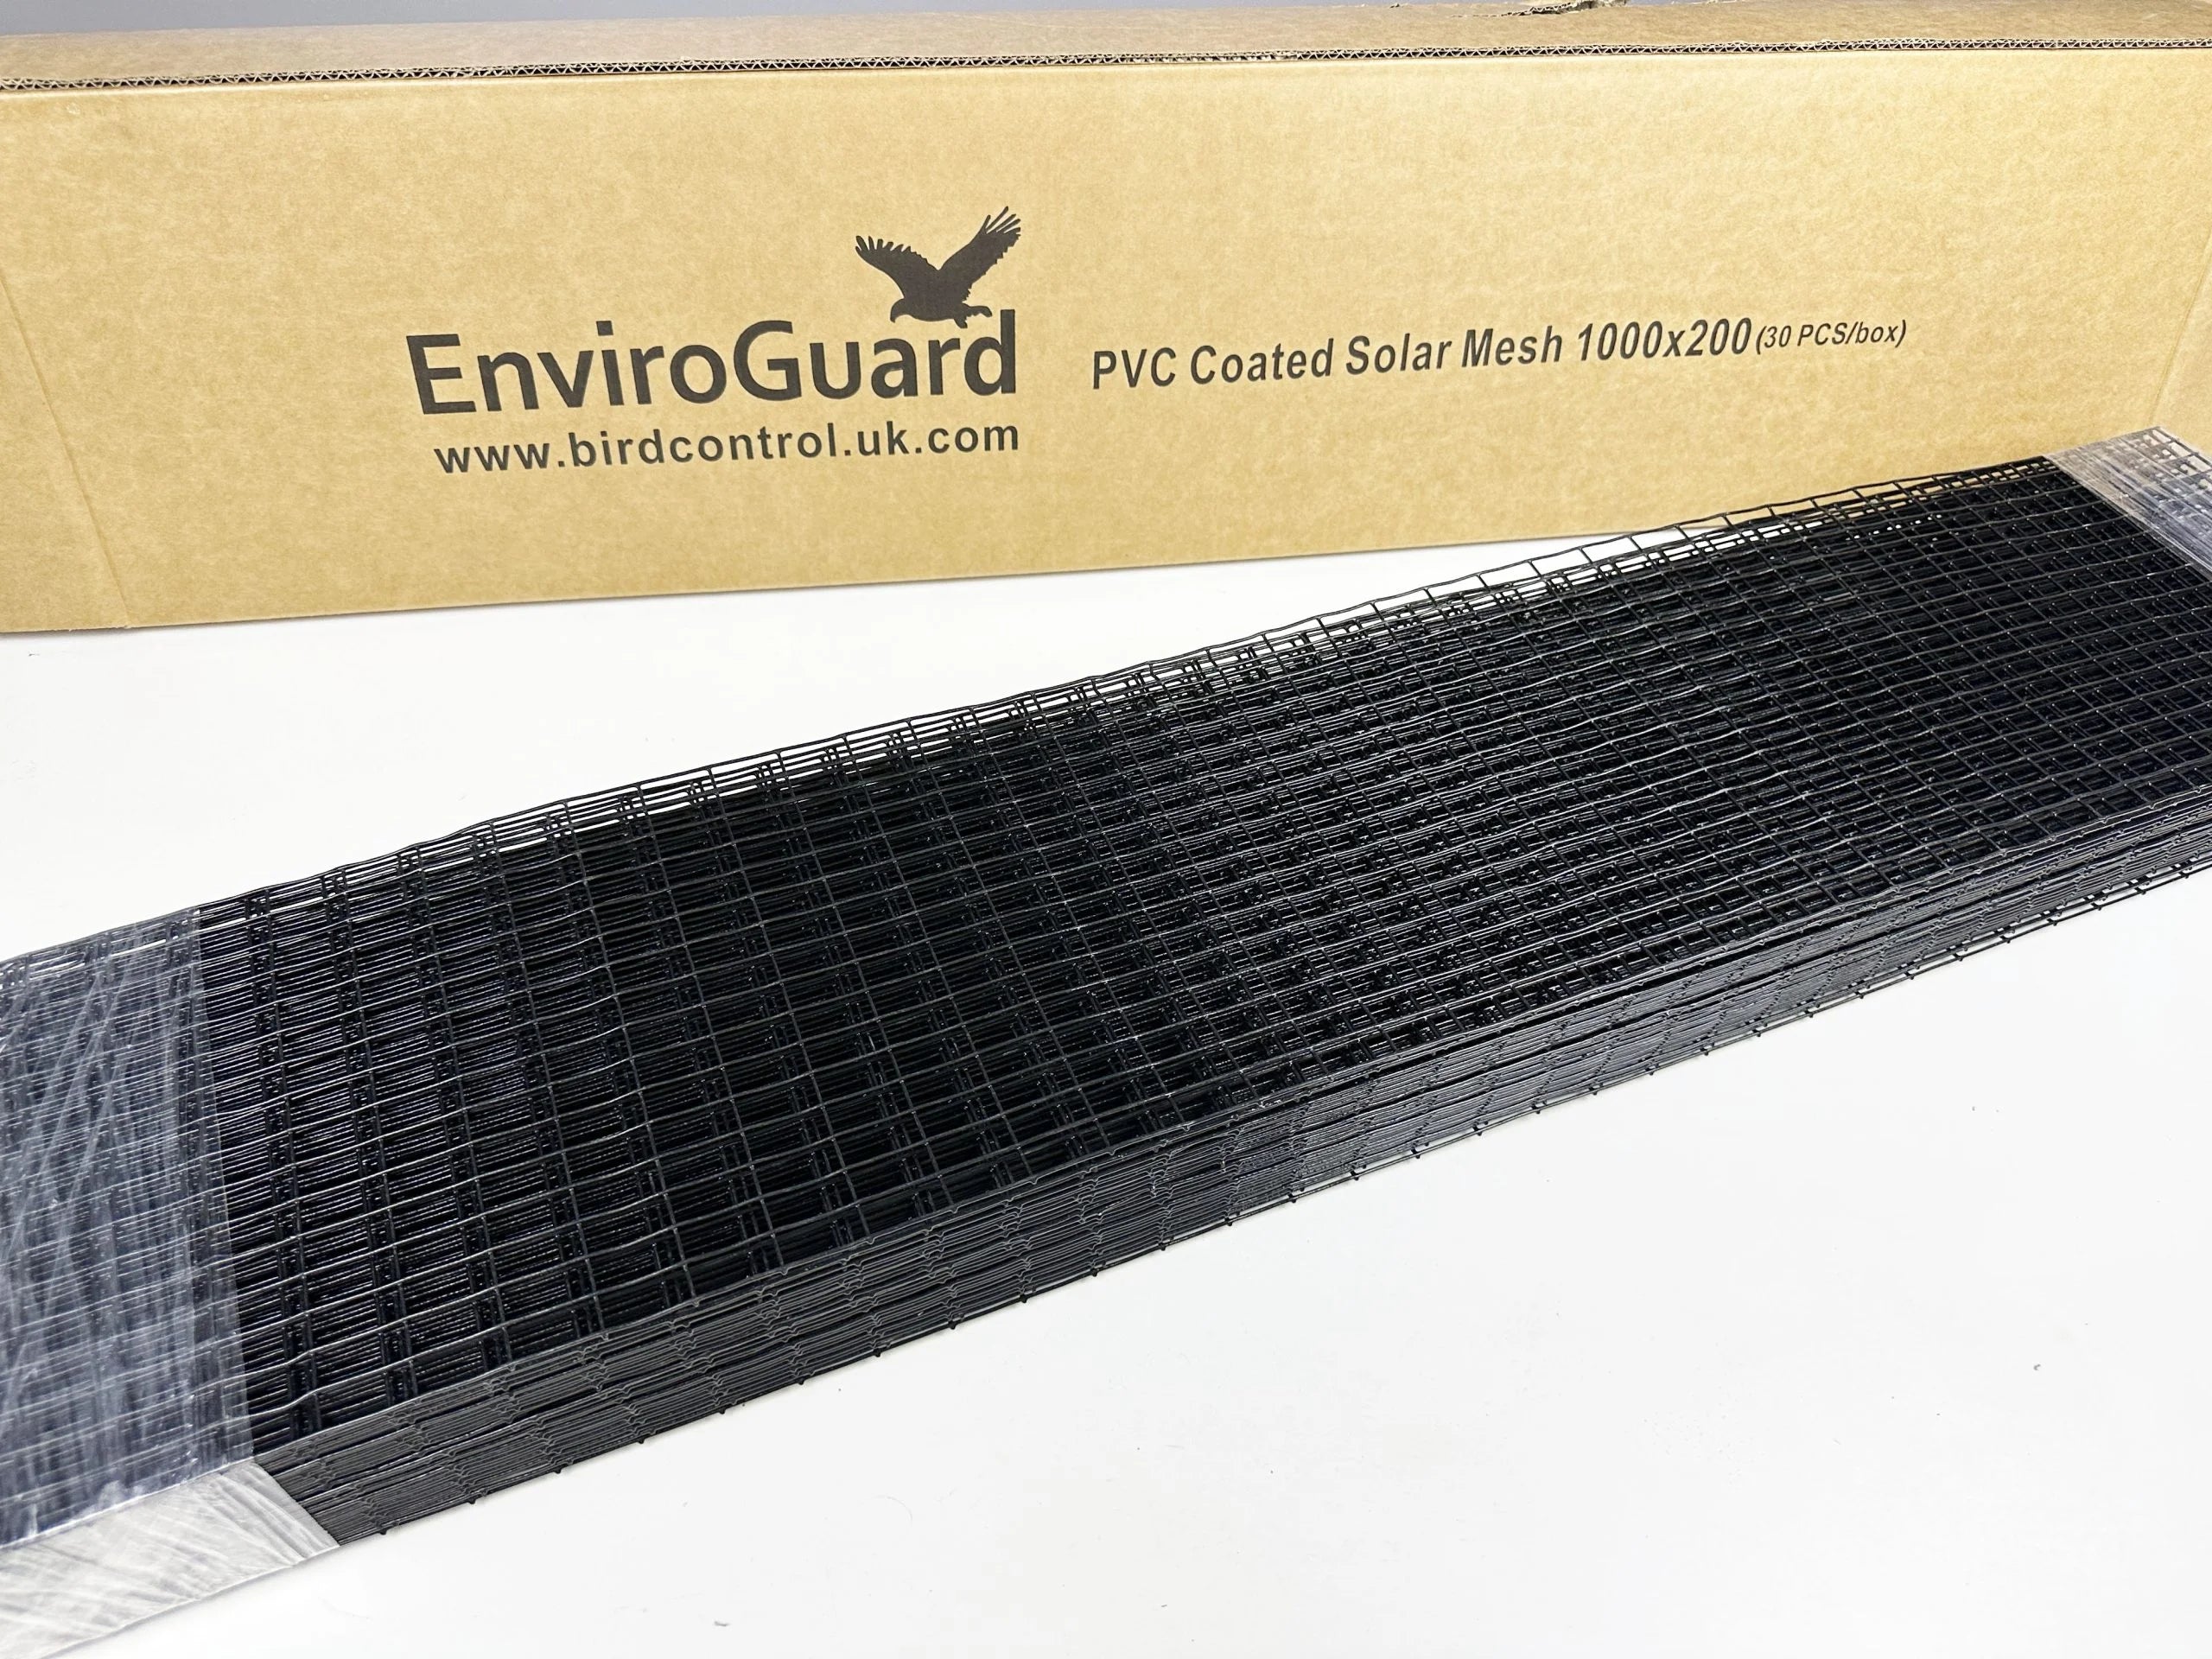 EnviroGuard Pre cut 1m Lengths – PVC Coated Solar Mesh